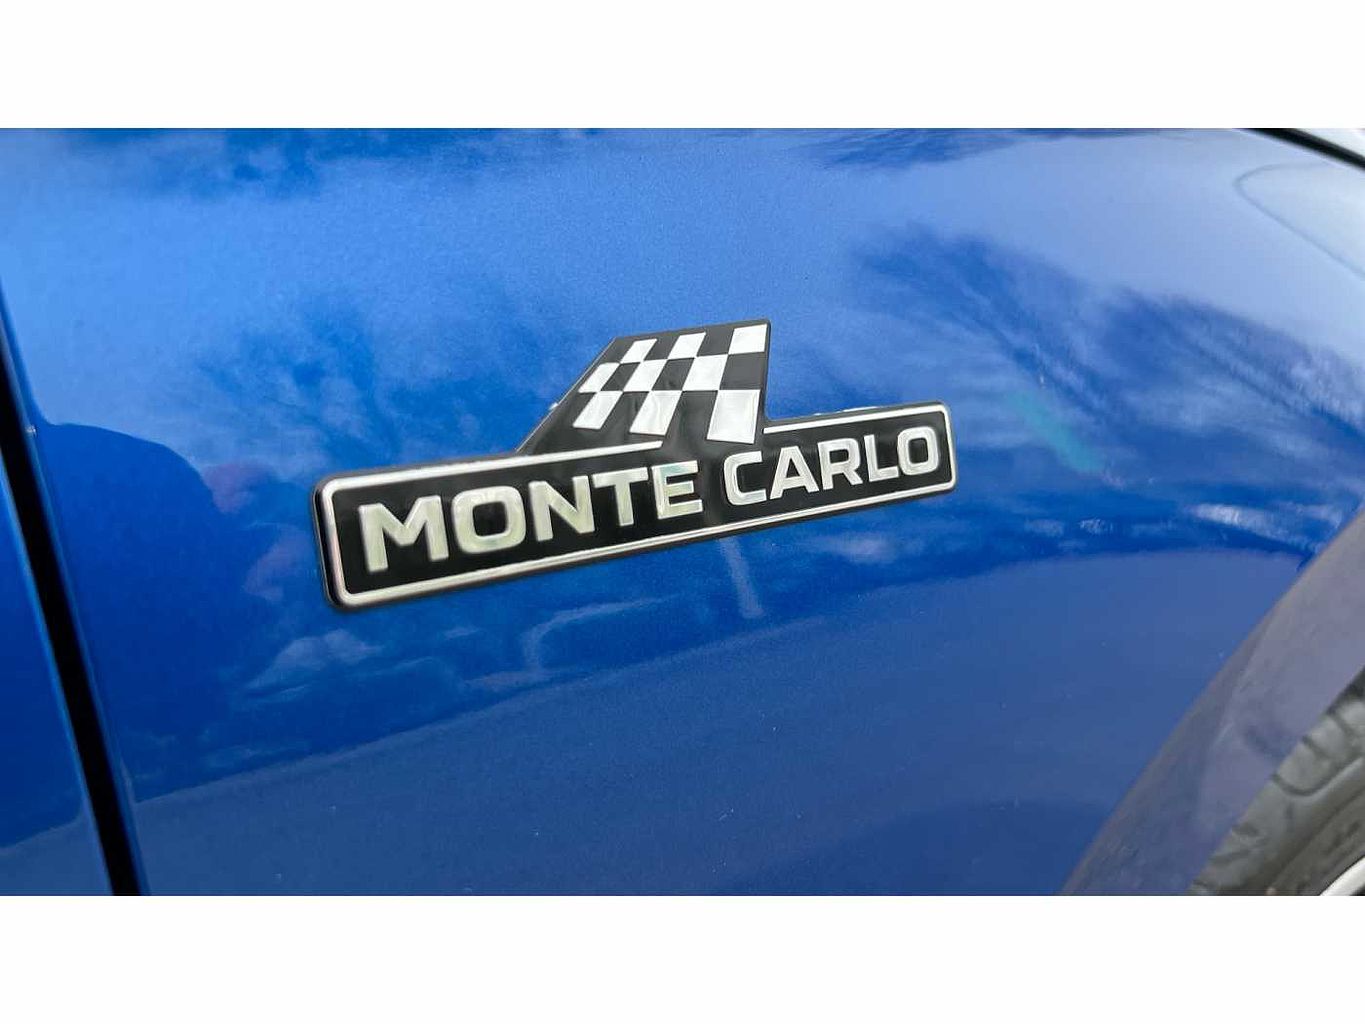 SKODA SCALA Monte Carlo 1.0 TSI 116 PS 6G Man